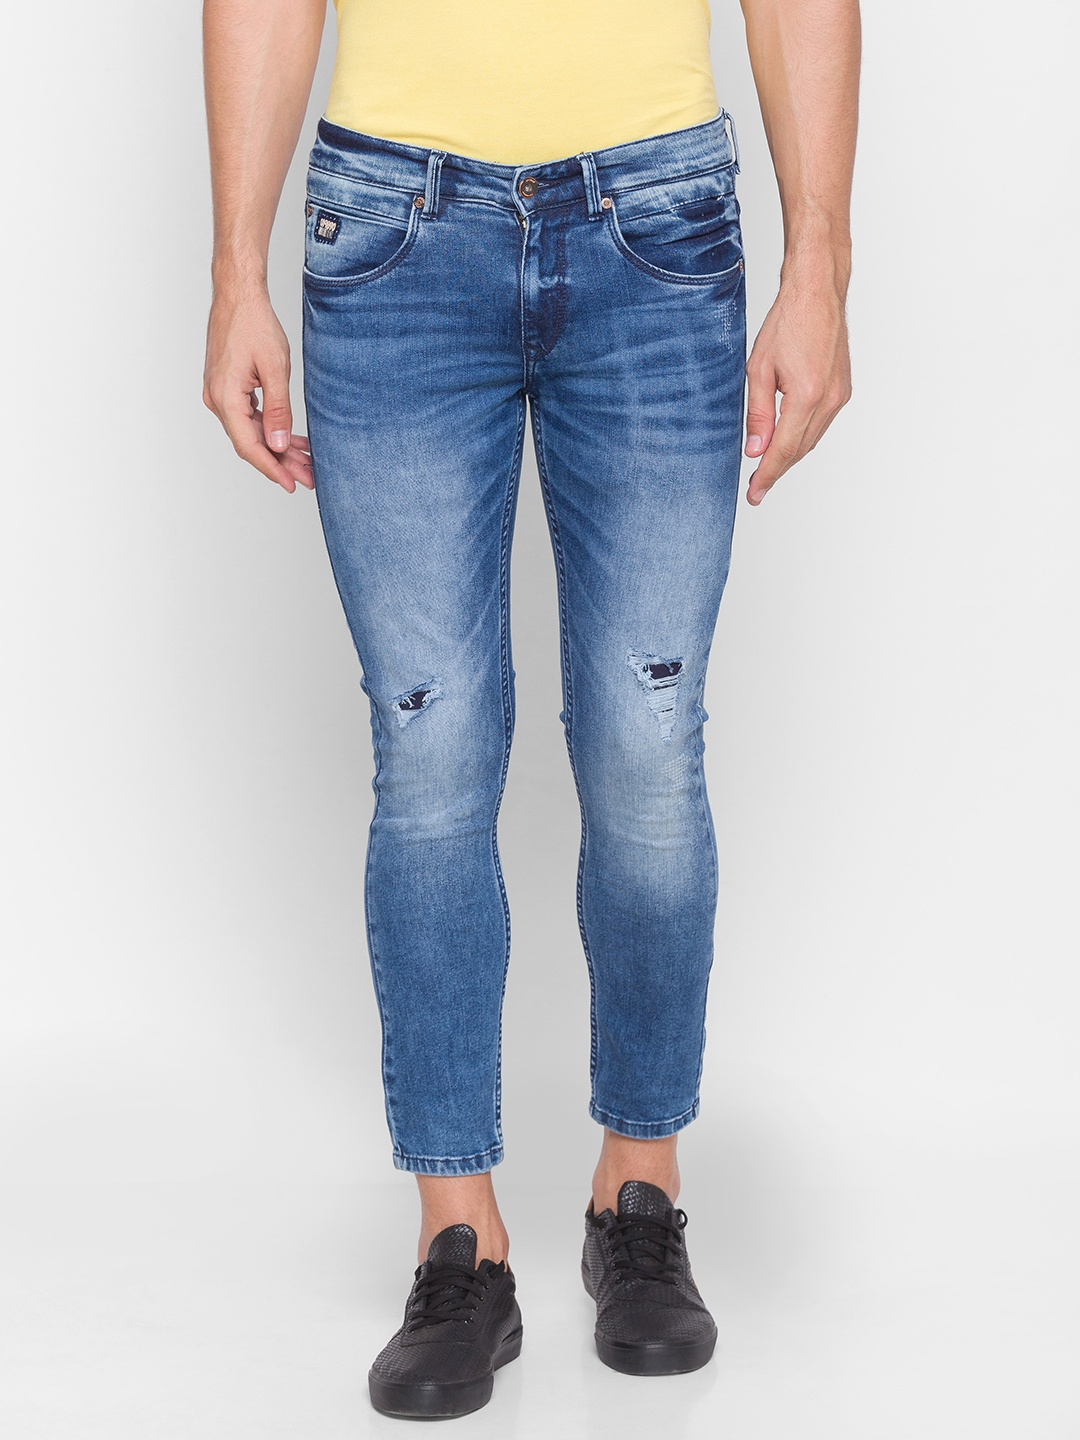 Men's Blue Cotton Solid Skinny Jeans